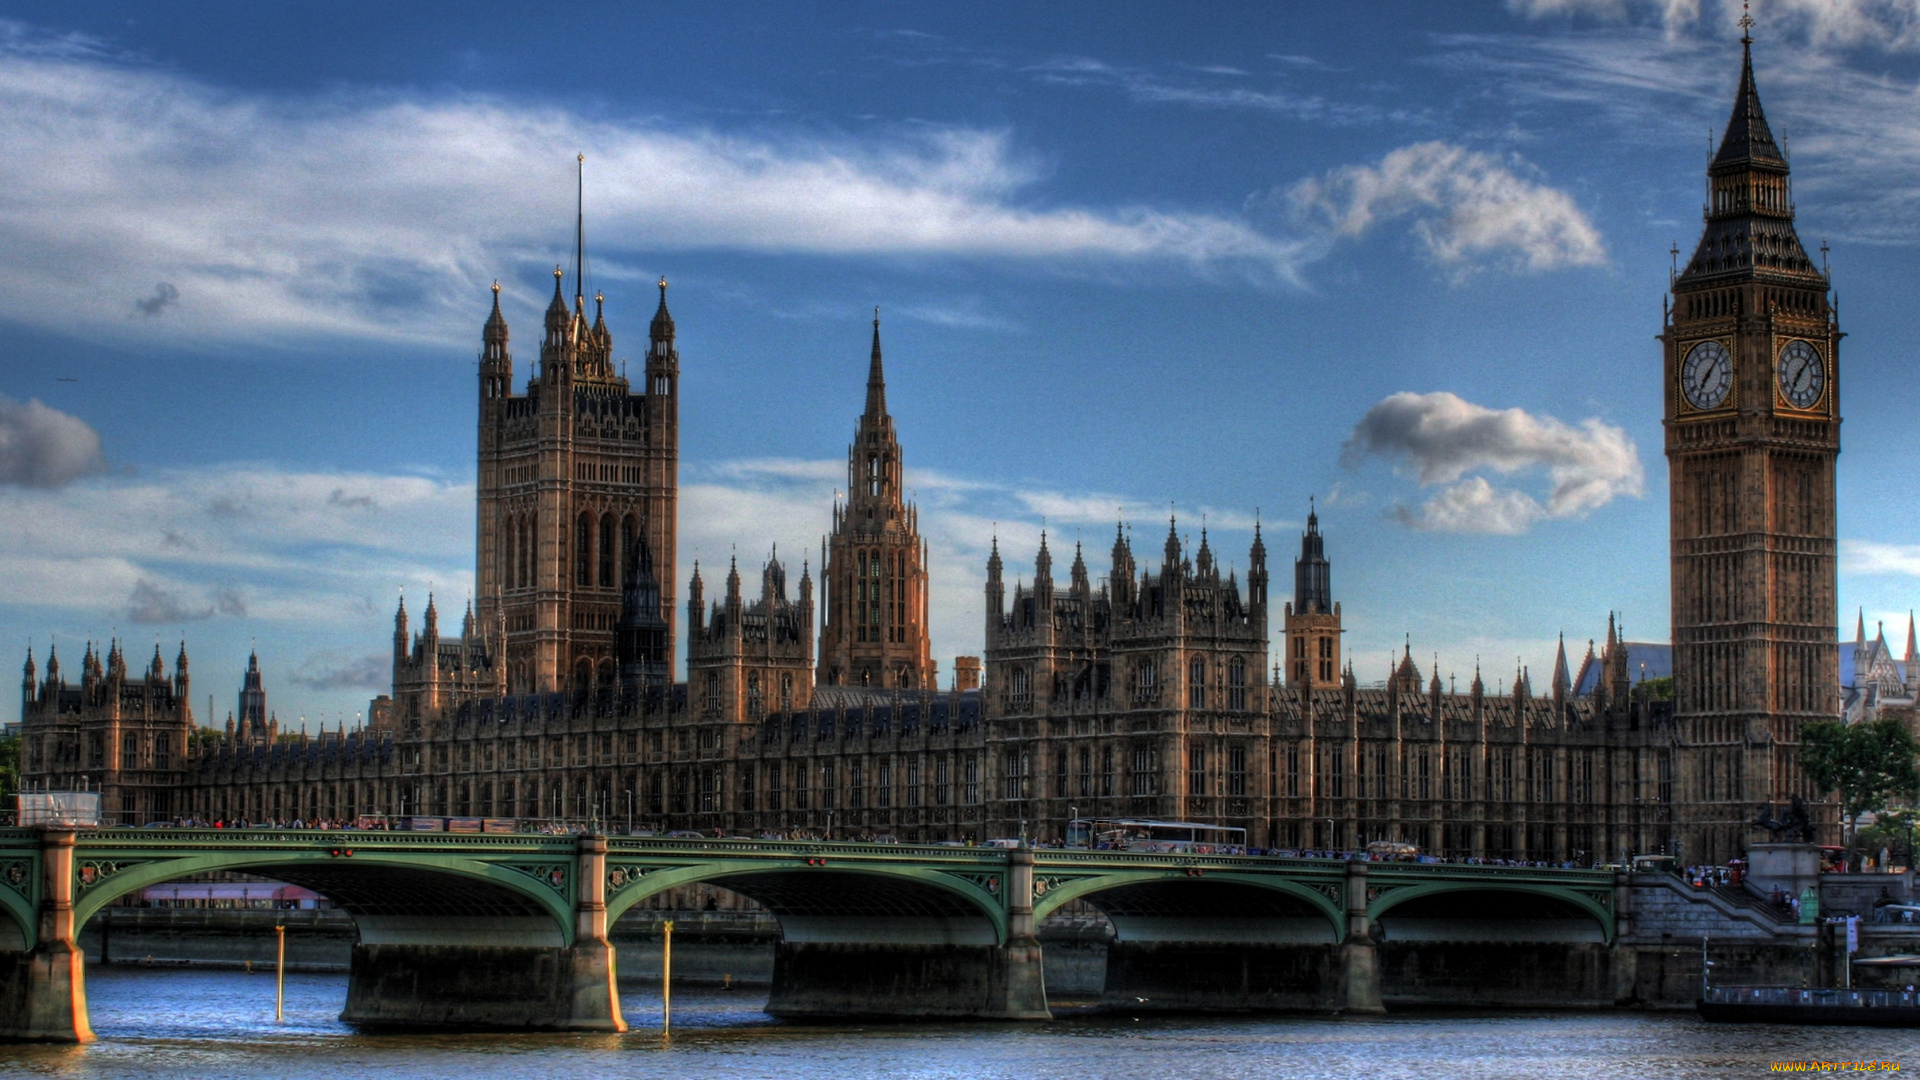 parliament, города, лондон, великобритания, англия, парламент